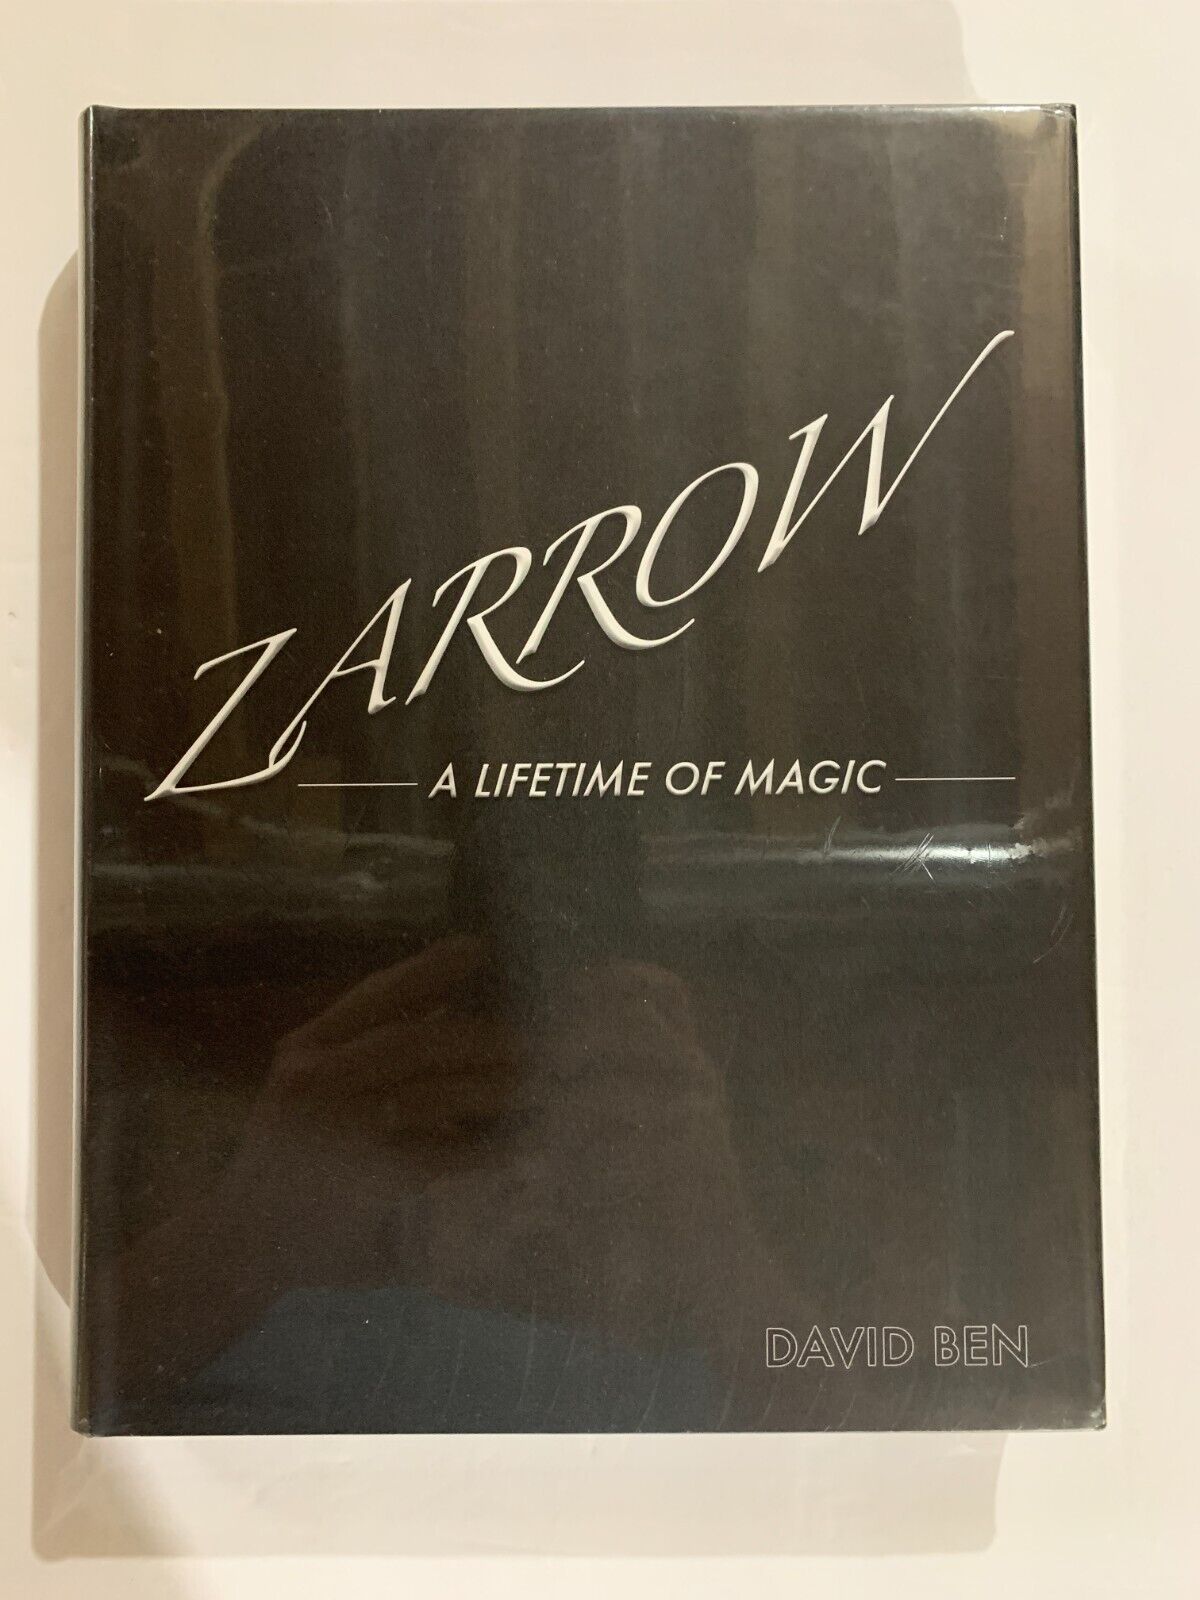 Zarrow A lifetime of magic - David Ben - Magic book - RARE - BRAND NEW SEALED